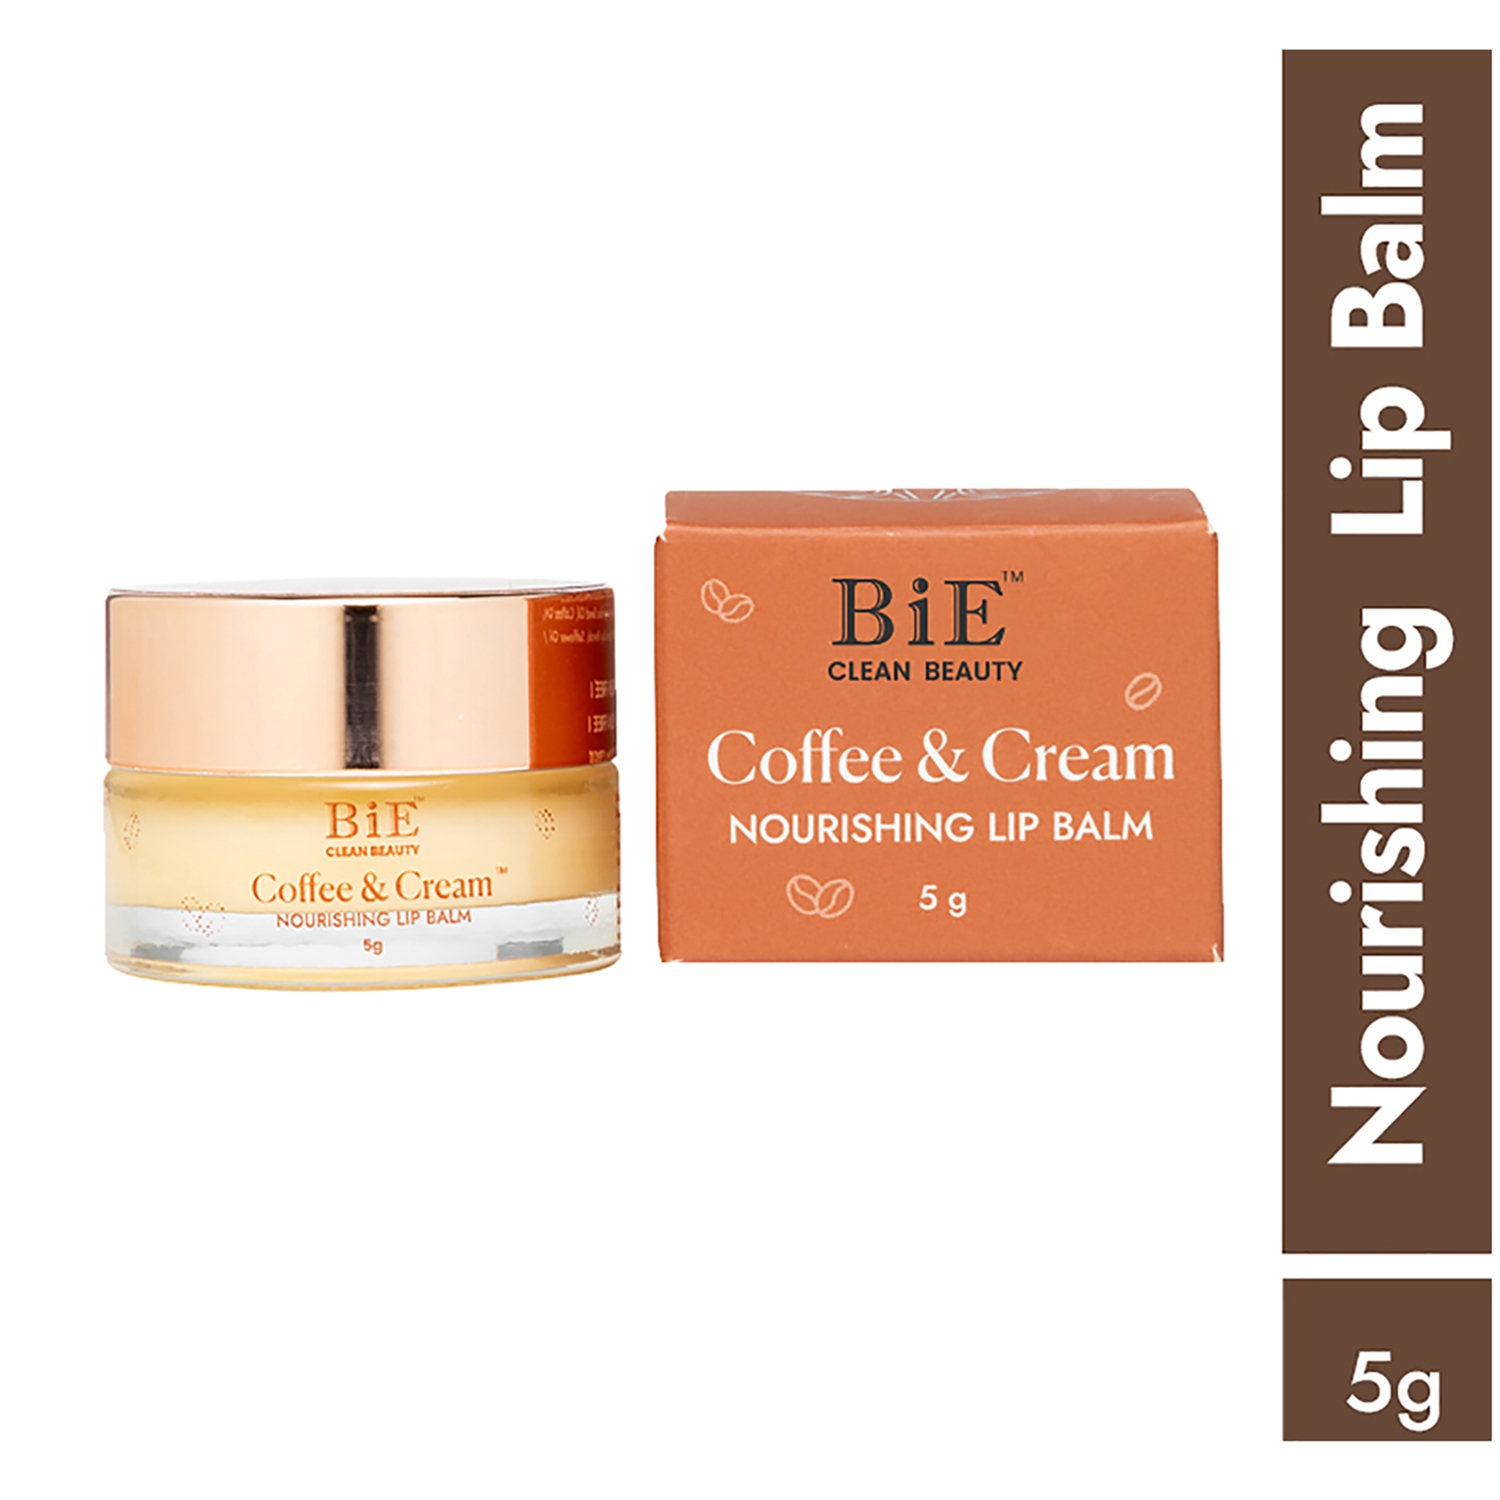 BiE - Beauty In Everything | Bie Coffee & Cream Nourishing Lip Balm (5g)